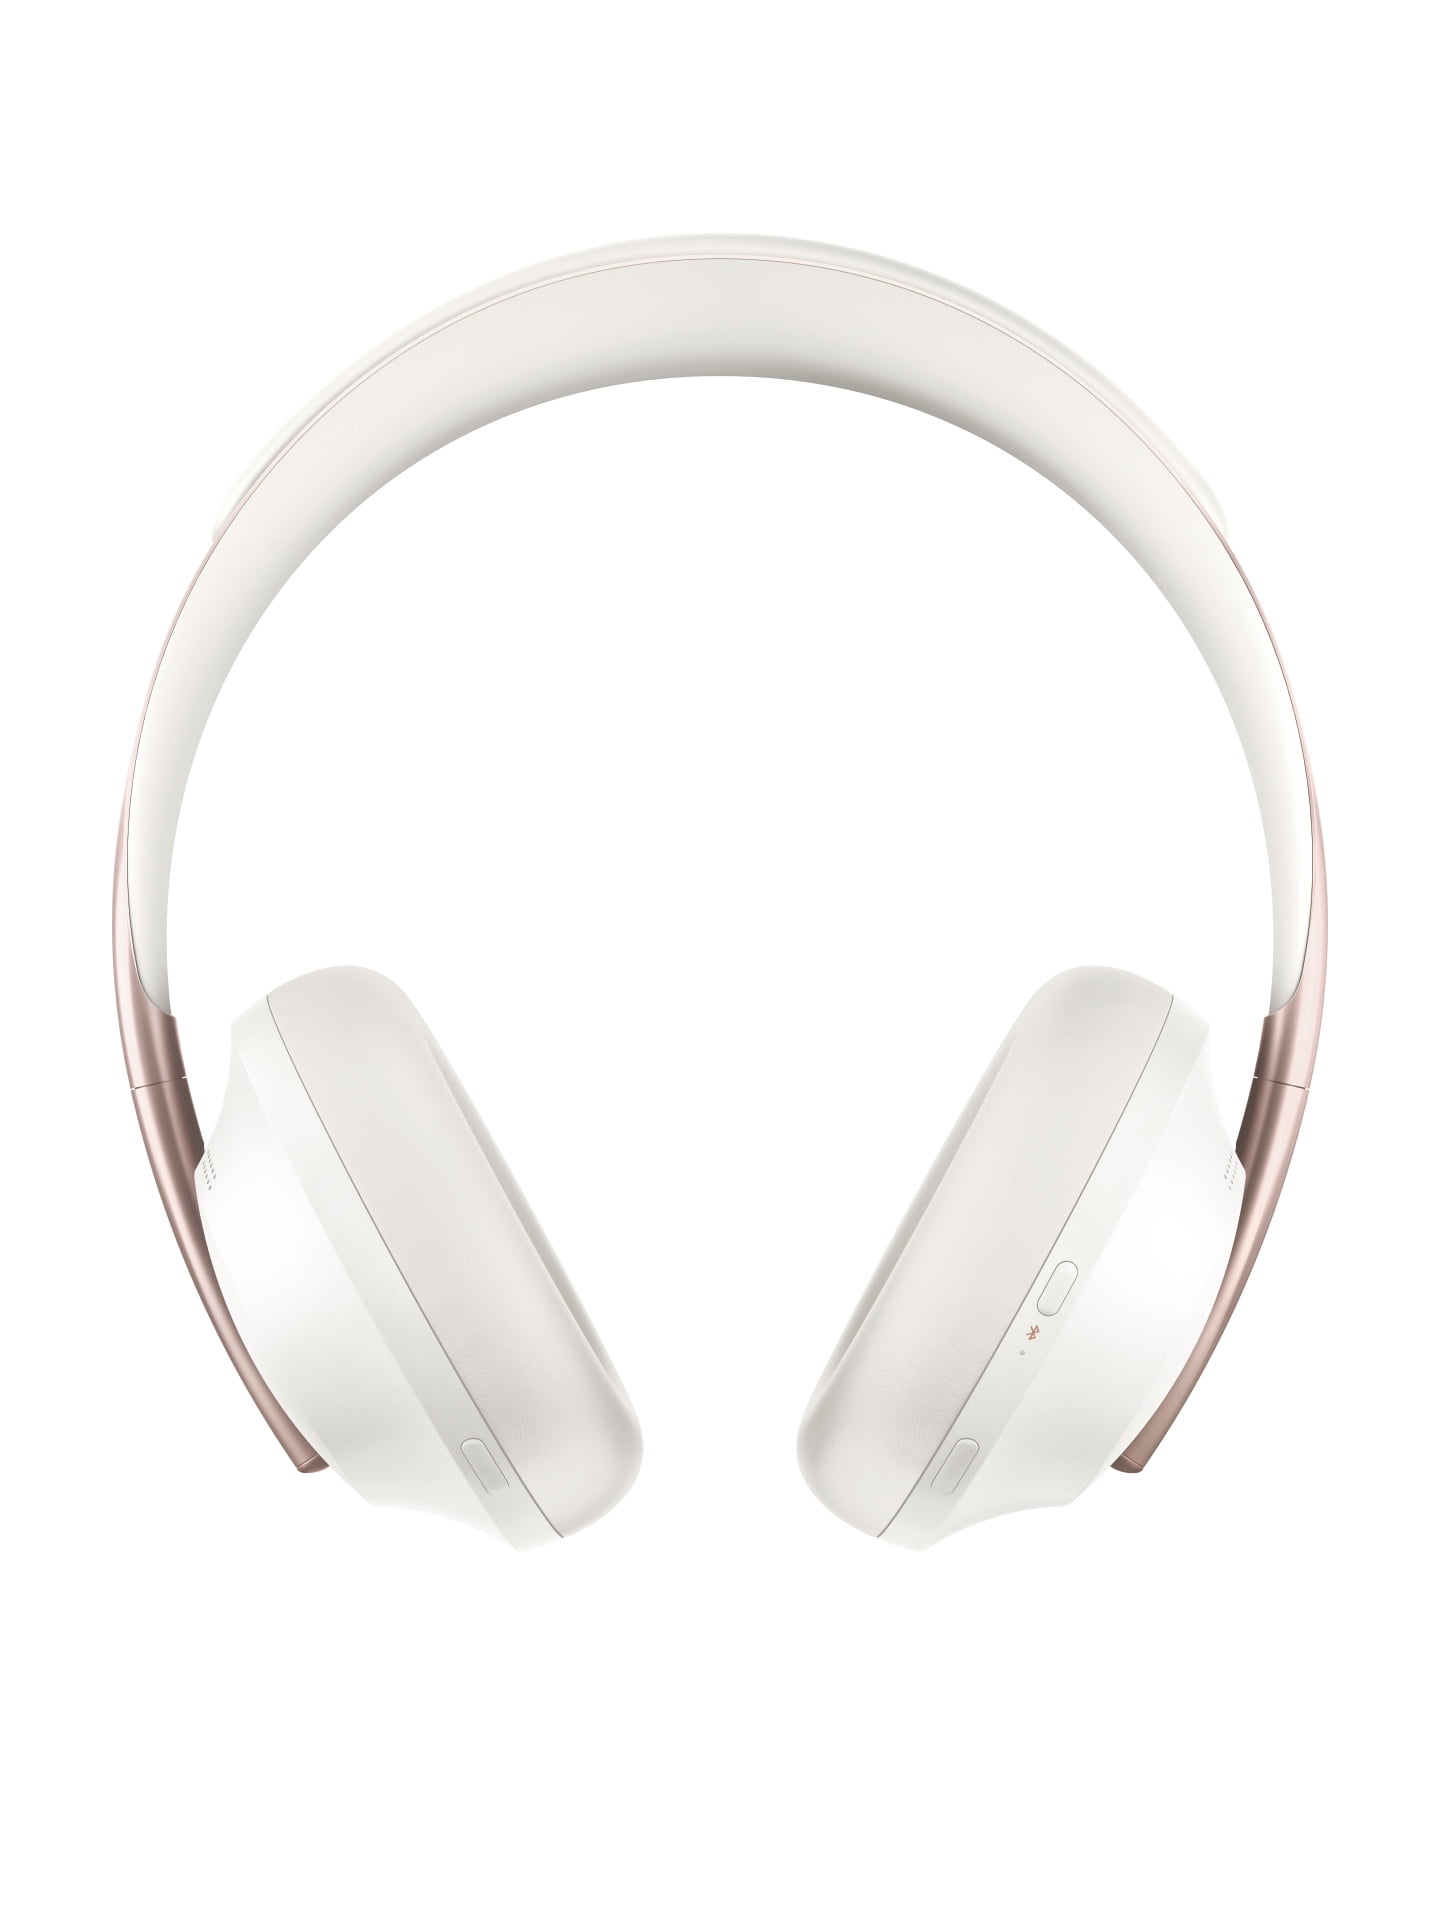 Bose Bluetooth Over-Ear Headphones, Noise White, 794297-0400 - Walmart.com